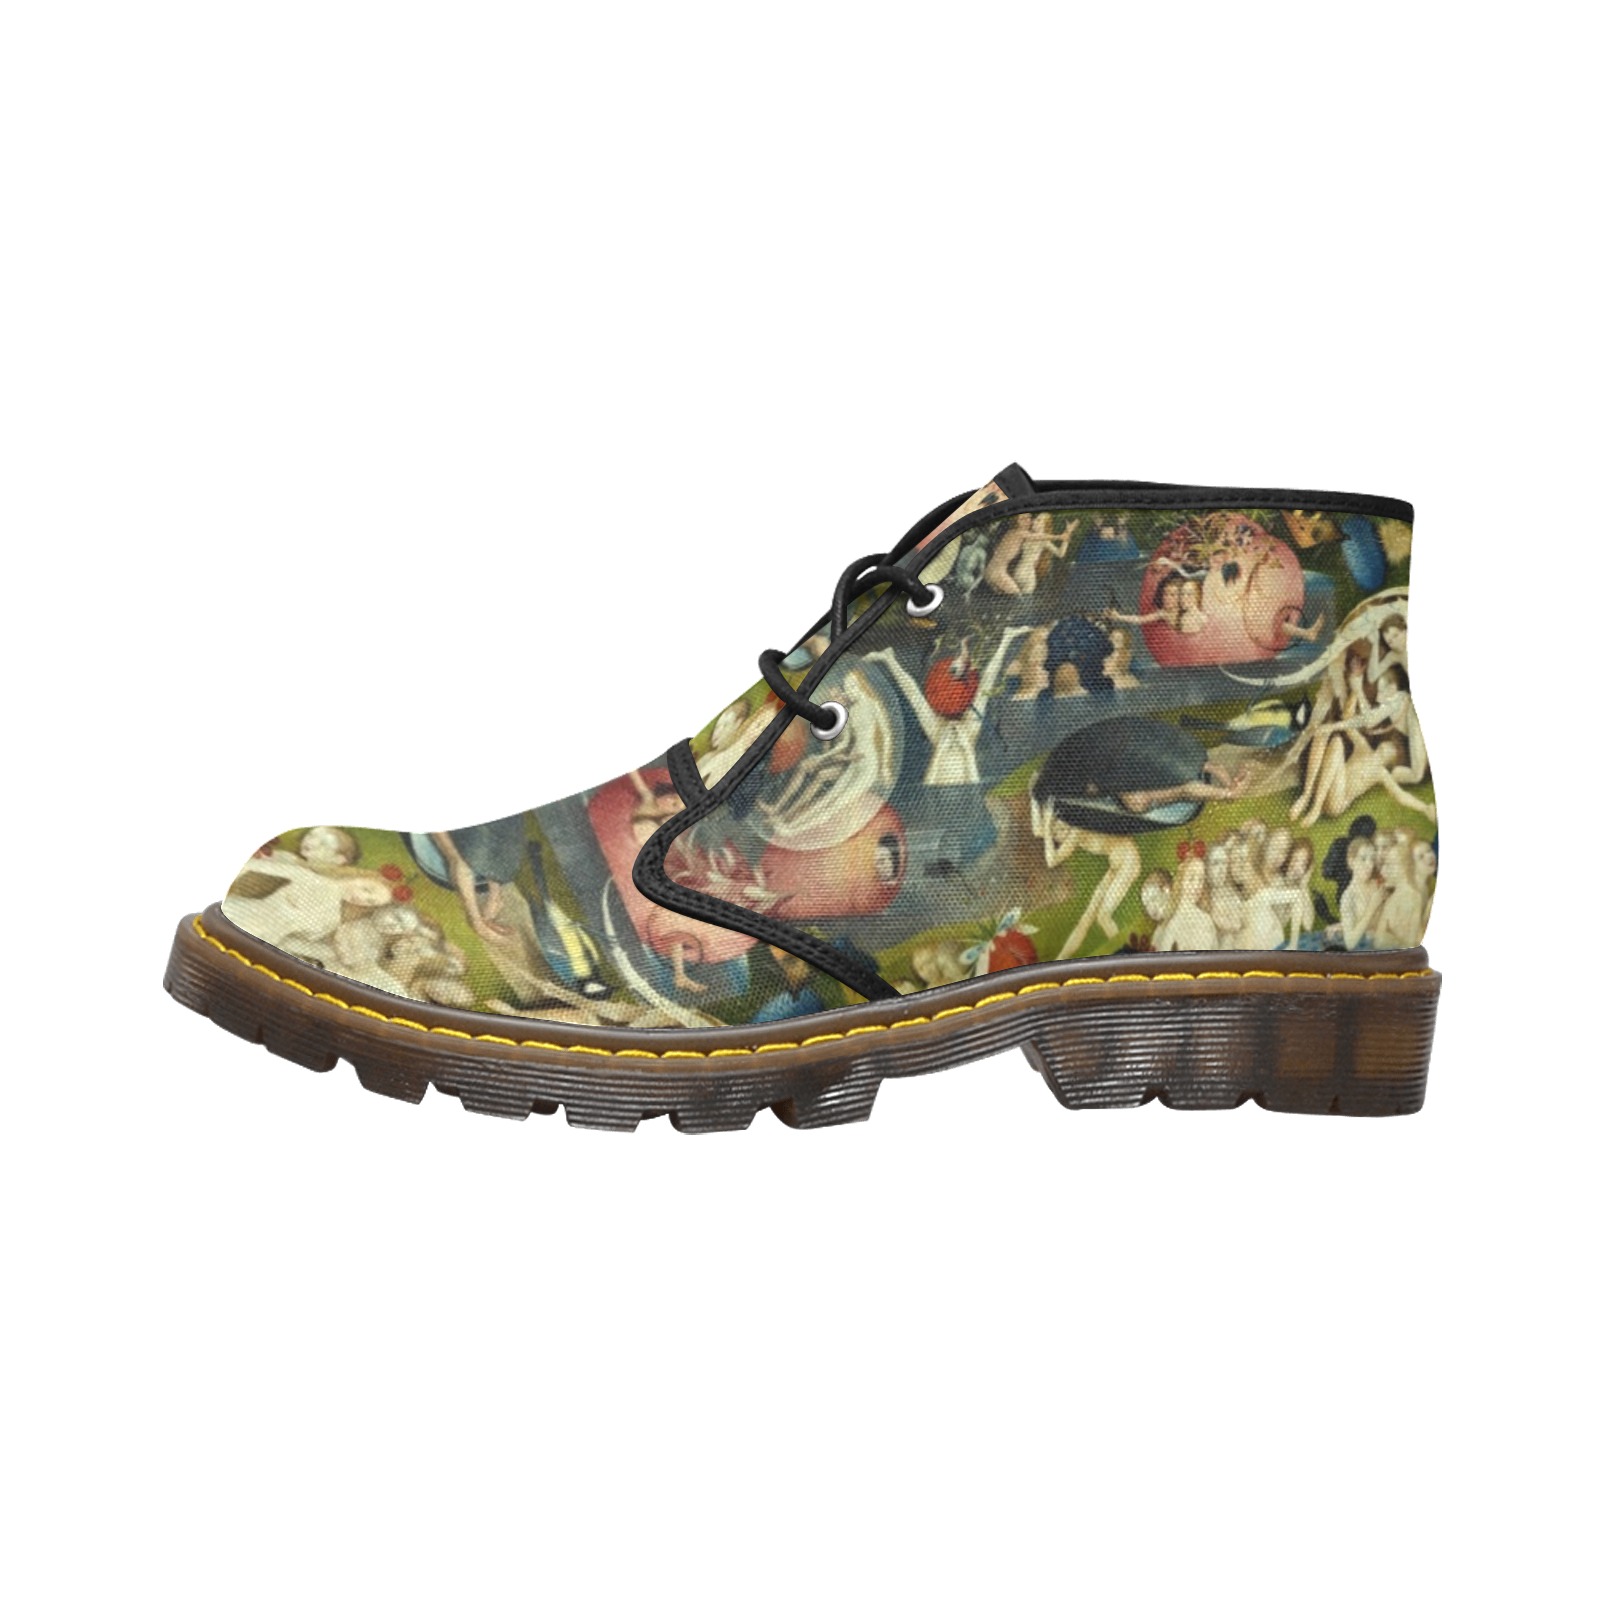 Garden of Earthly Delights 6 Women's Canvas Chukka Boots (Model 2402-1)